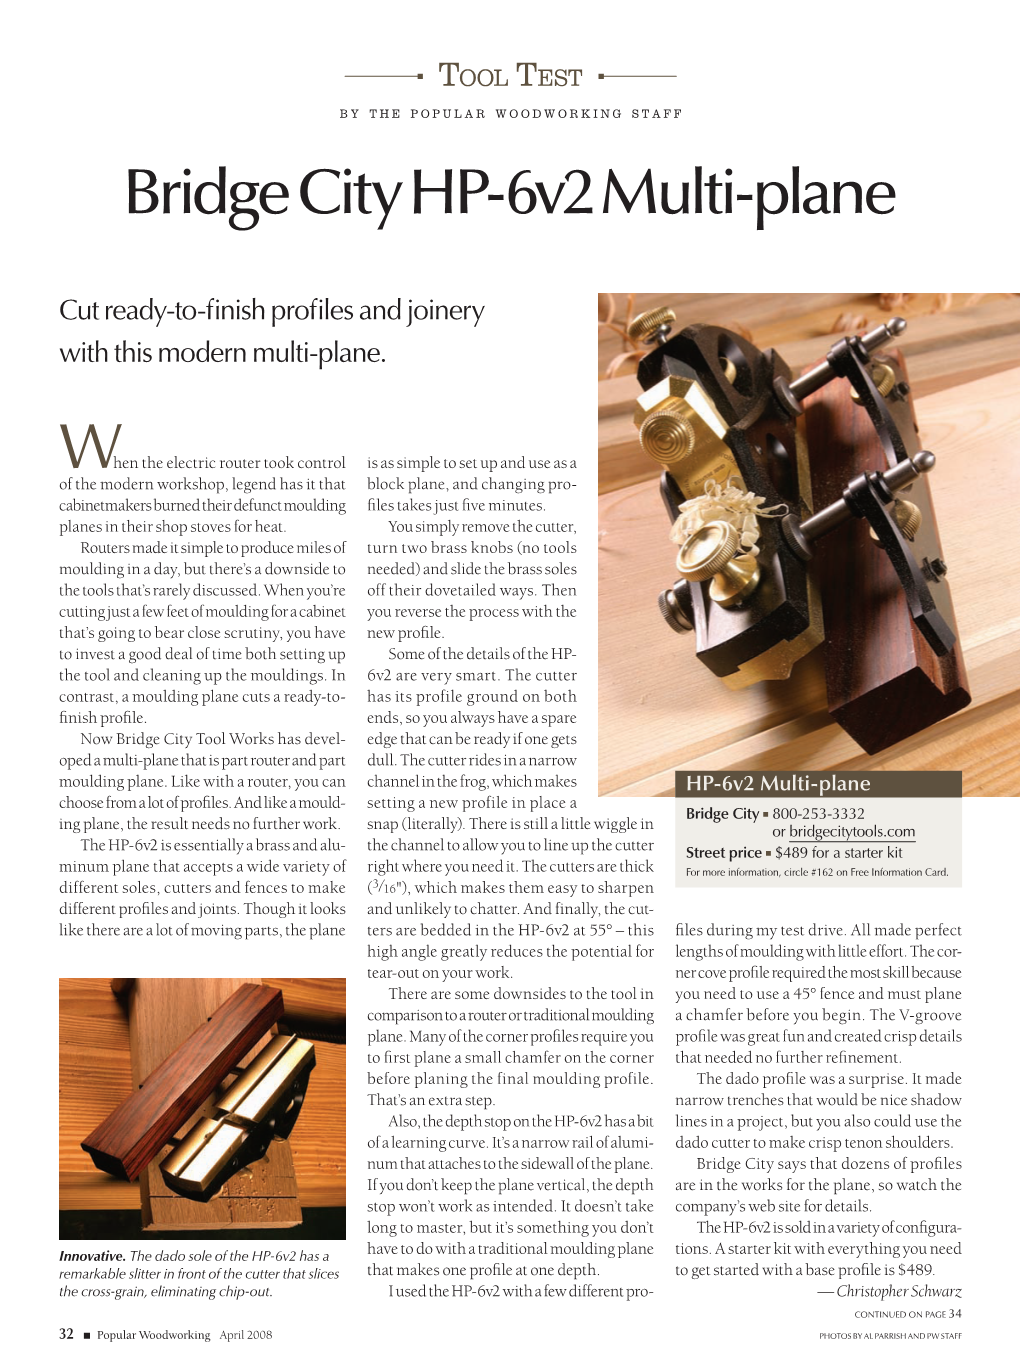 Bridge City HP-6V2 Multi-Plane